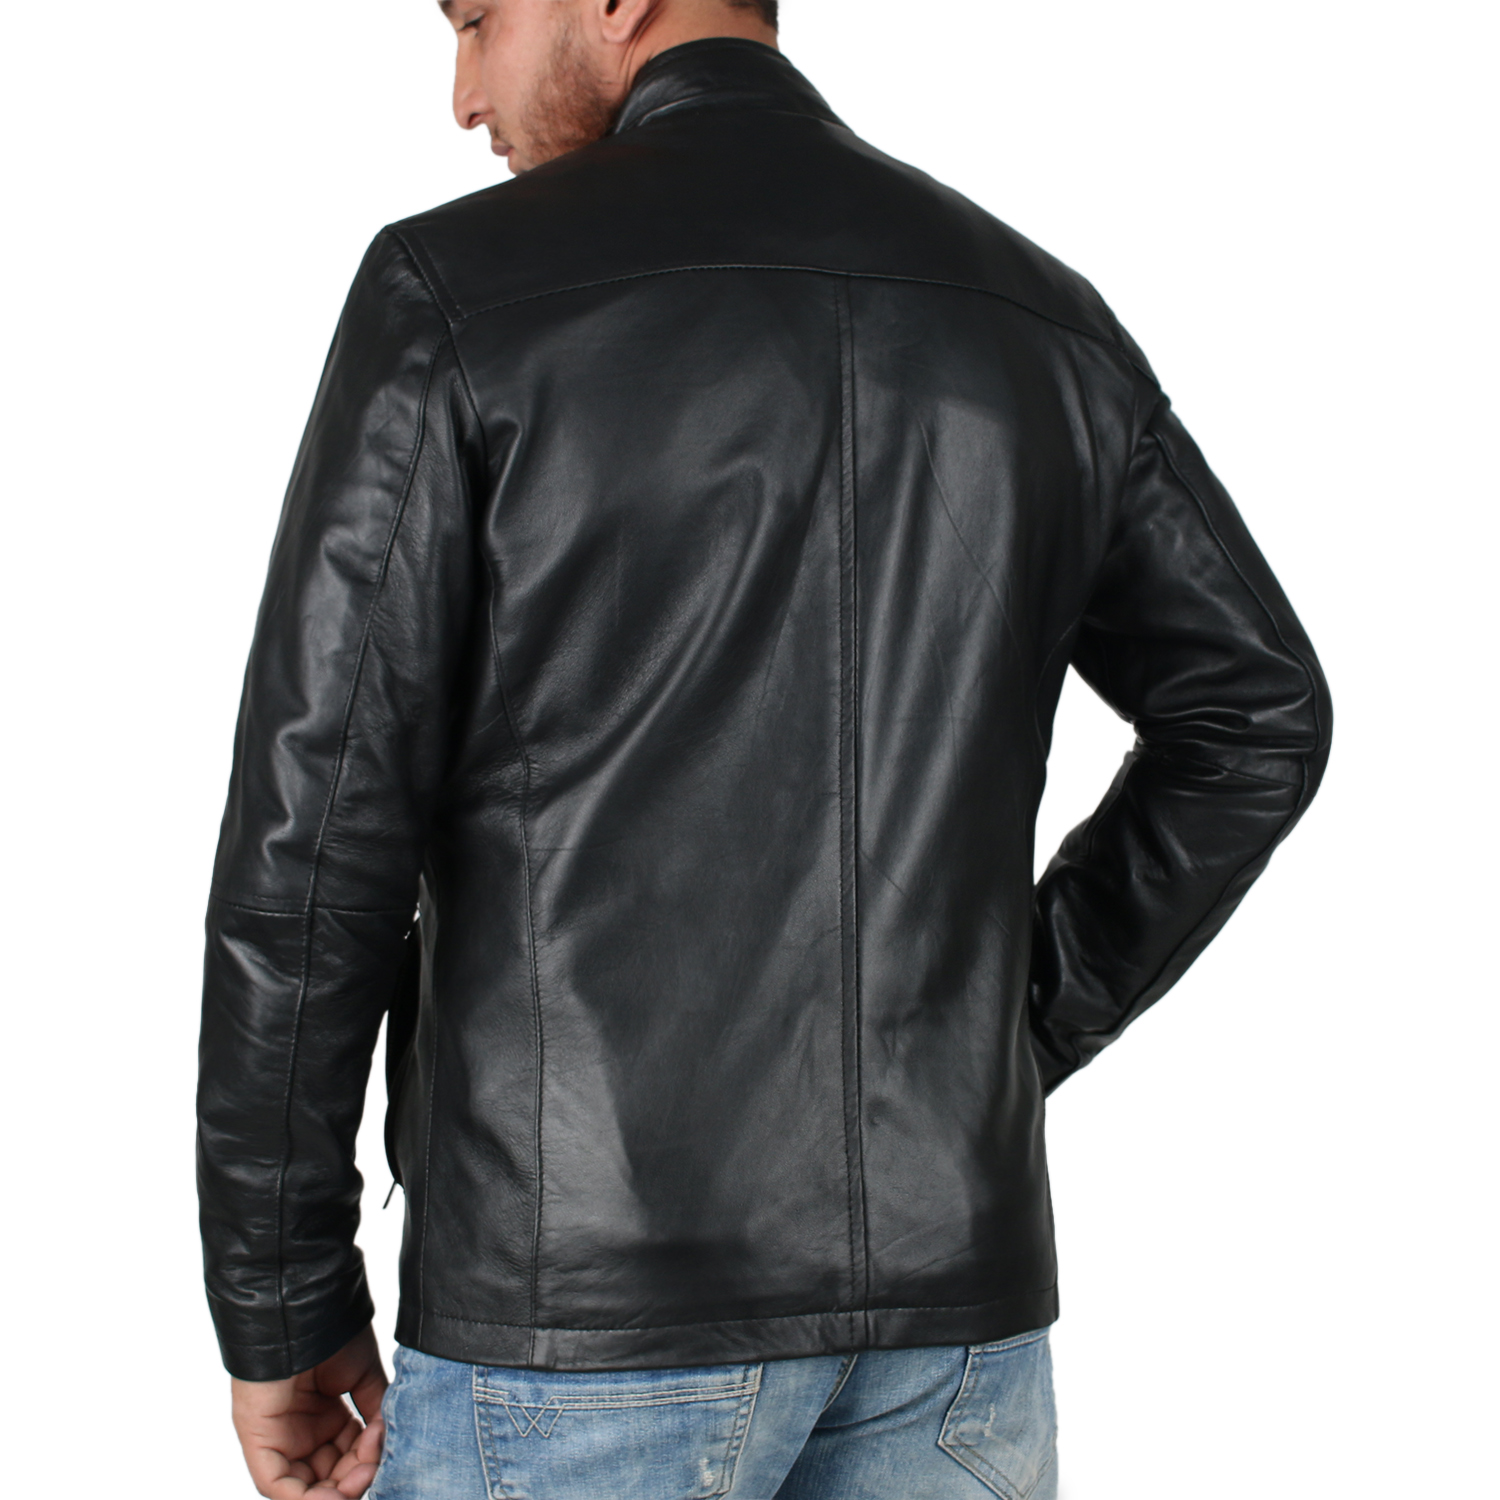 Laverapelle Mens Black Genuine Lambskin Leather Jacket - 1501135 | eBay